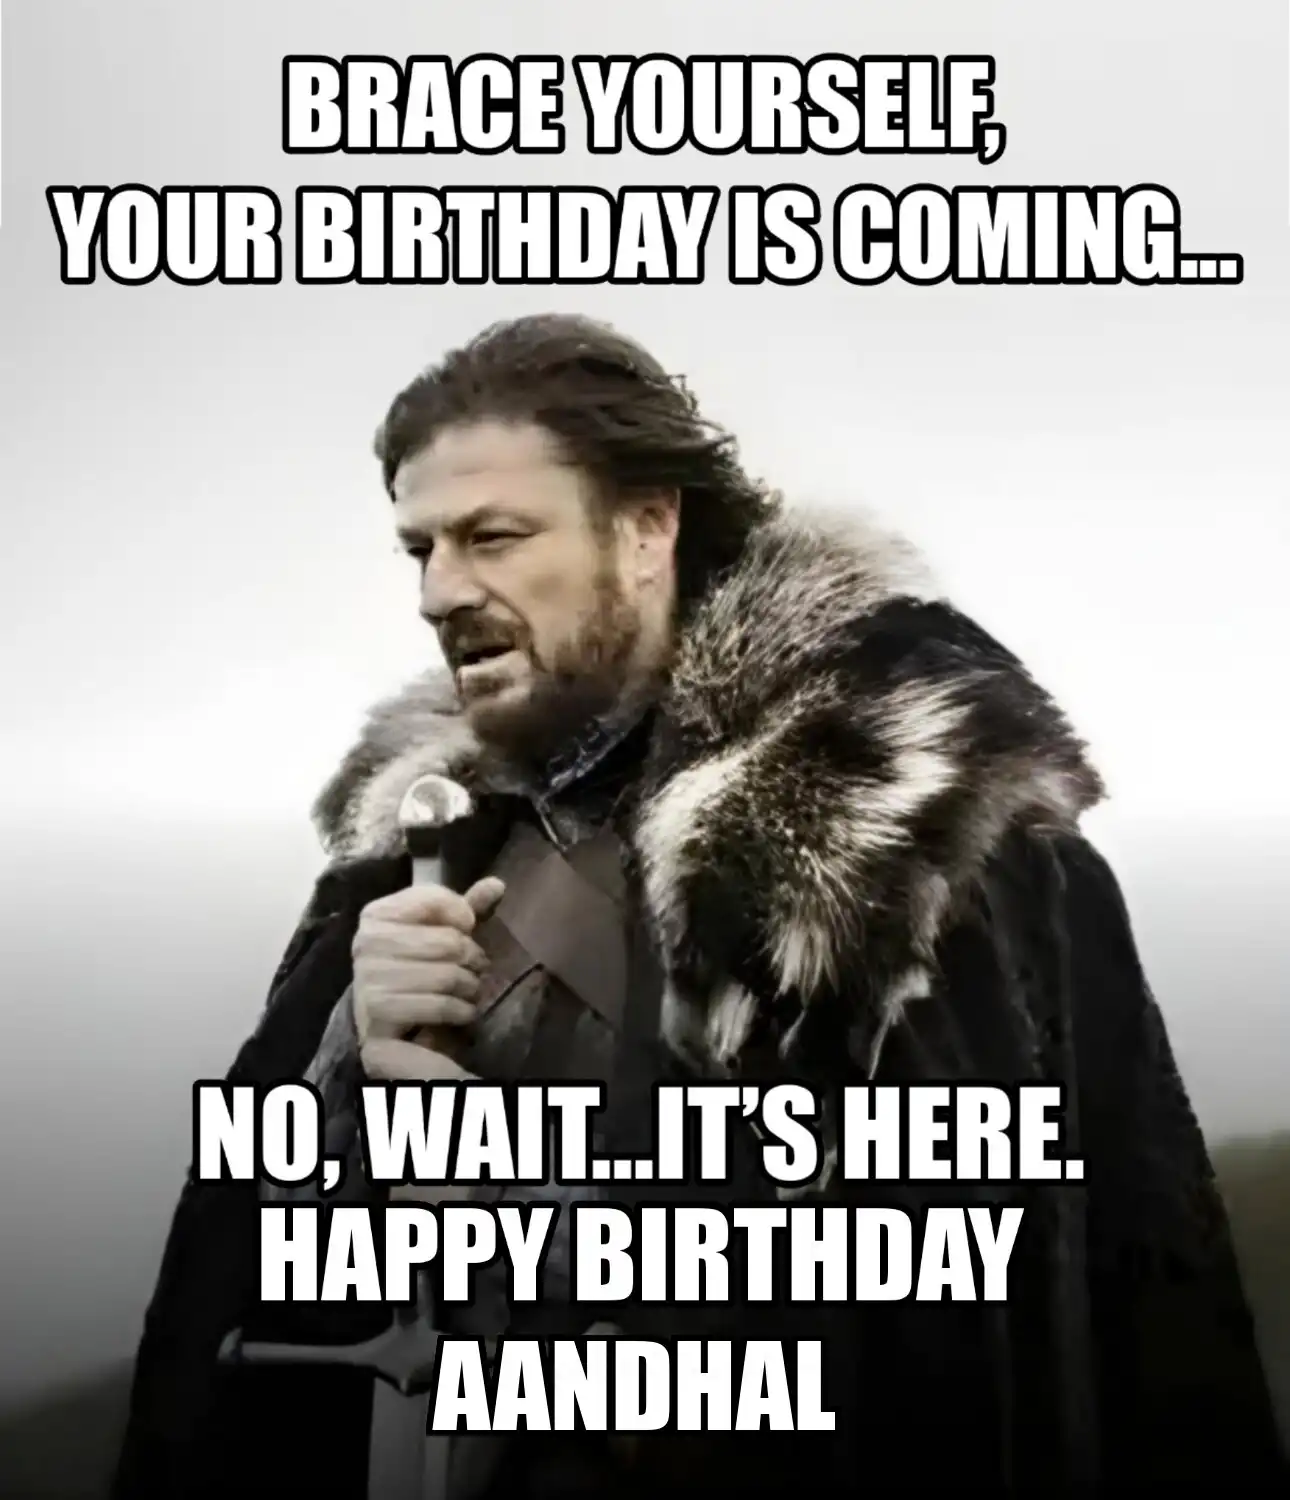 Happy Birthday Aandhal Brace Yourself Your Birthday Is Coming Meme